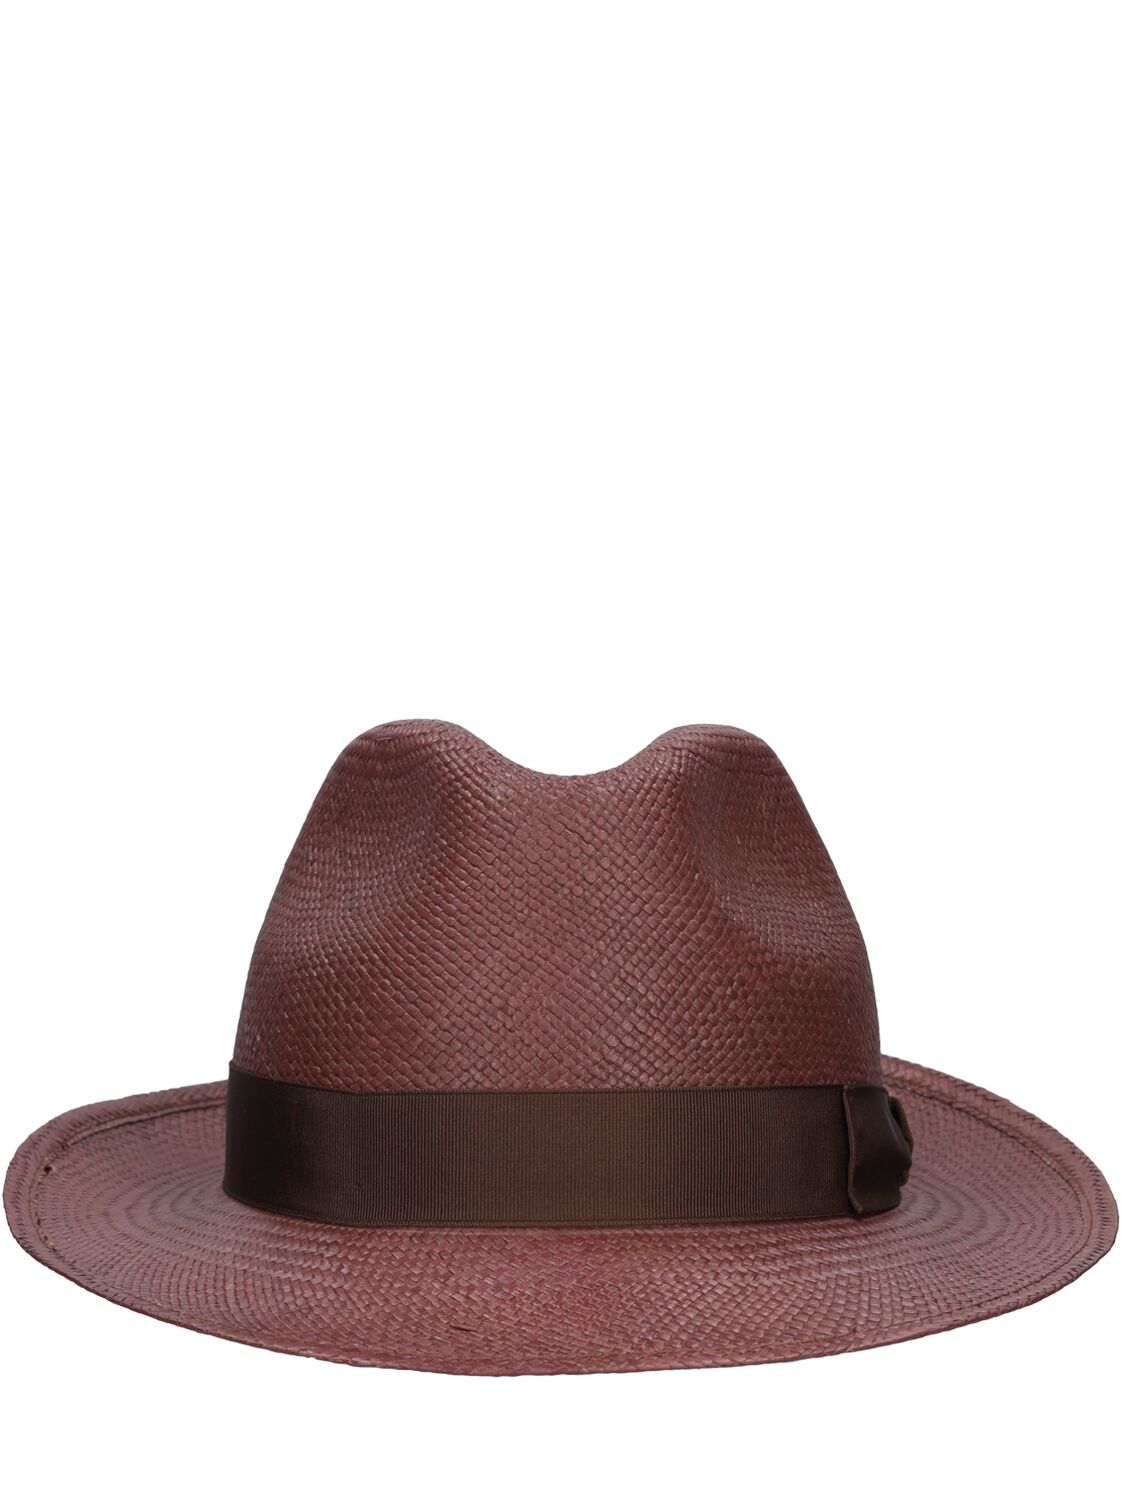 Image of Federico 6cm Brim Straw Panama Hat